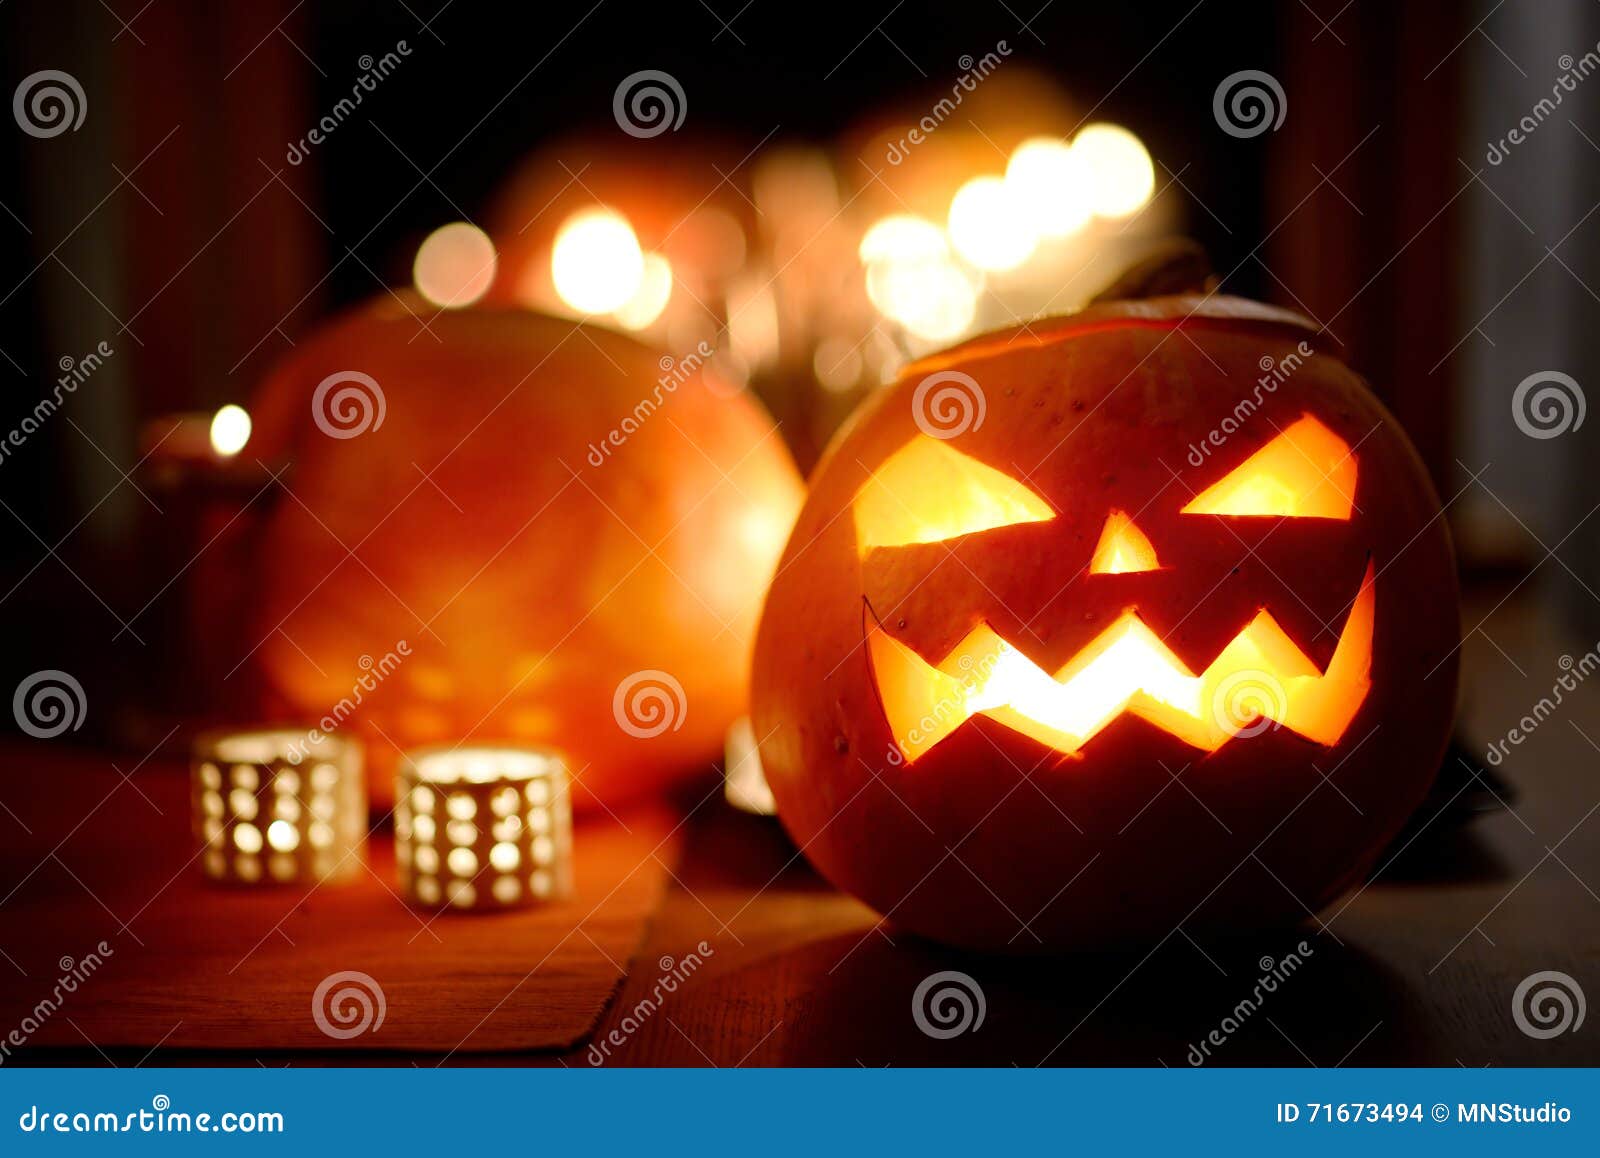 Spooky Halloween Jack-o-lanterns Lit at Night Stock Photo - Image of ...